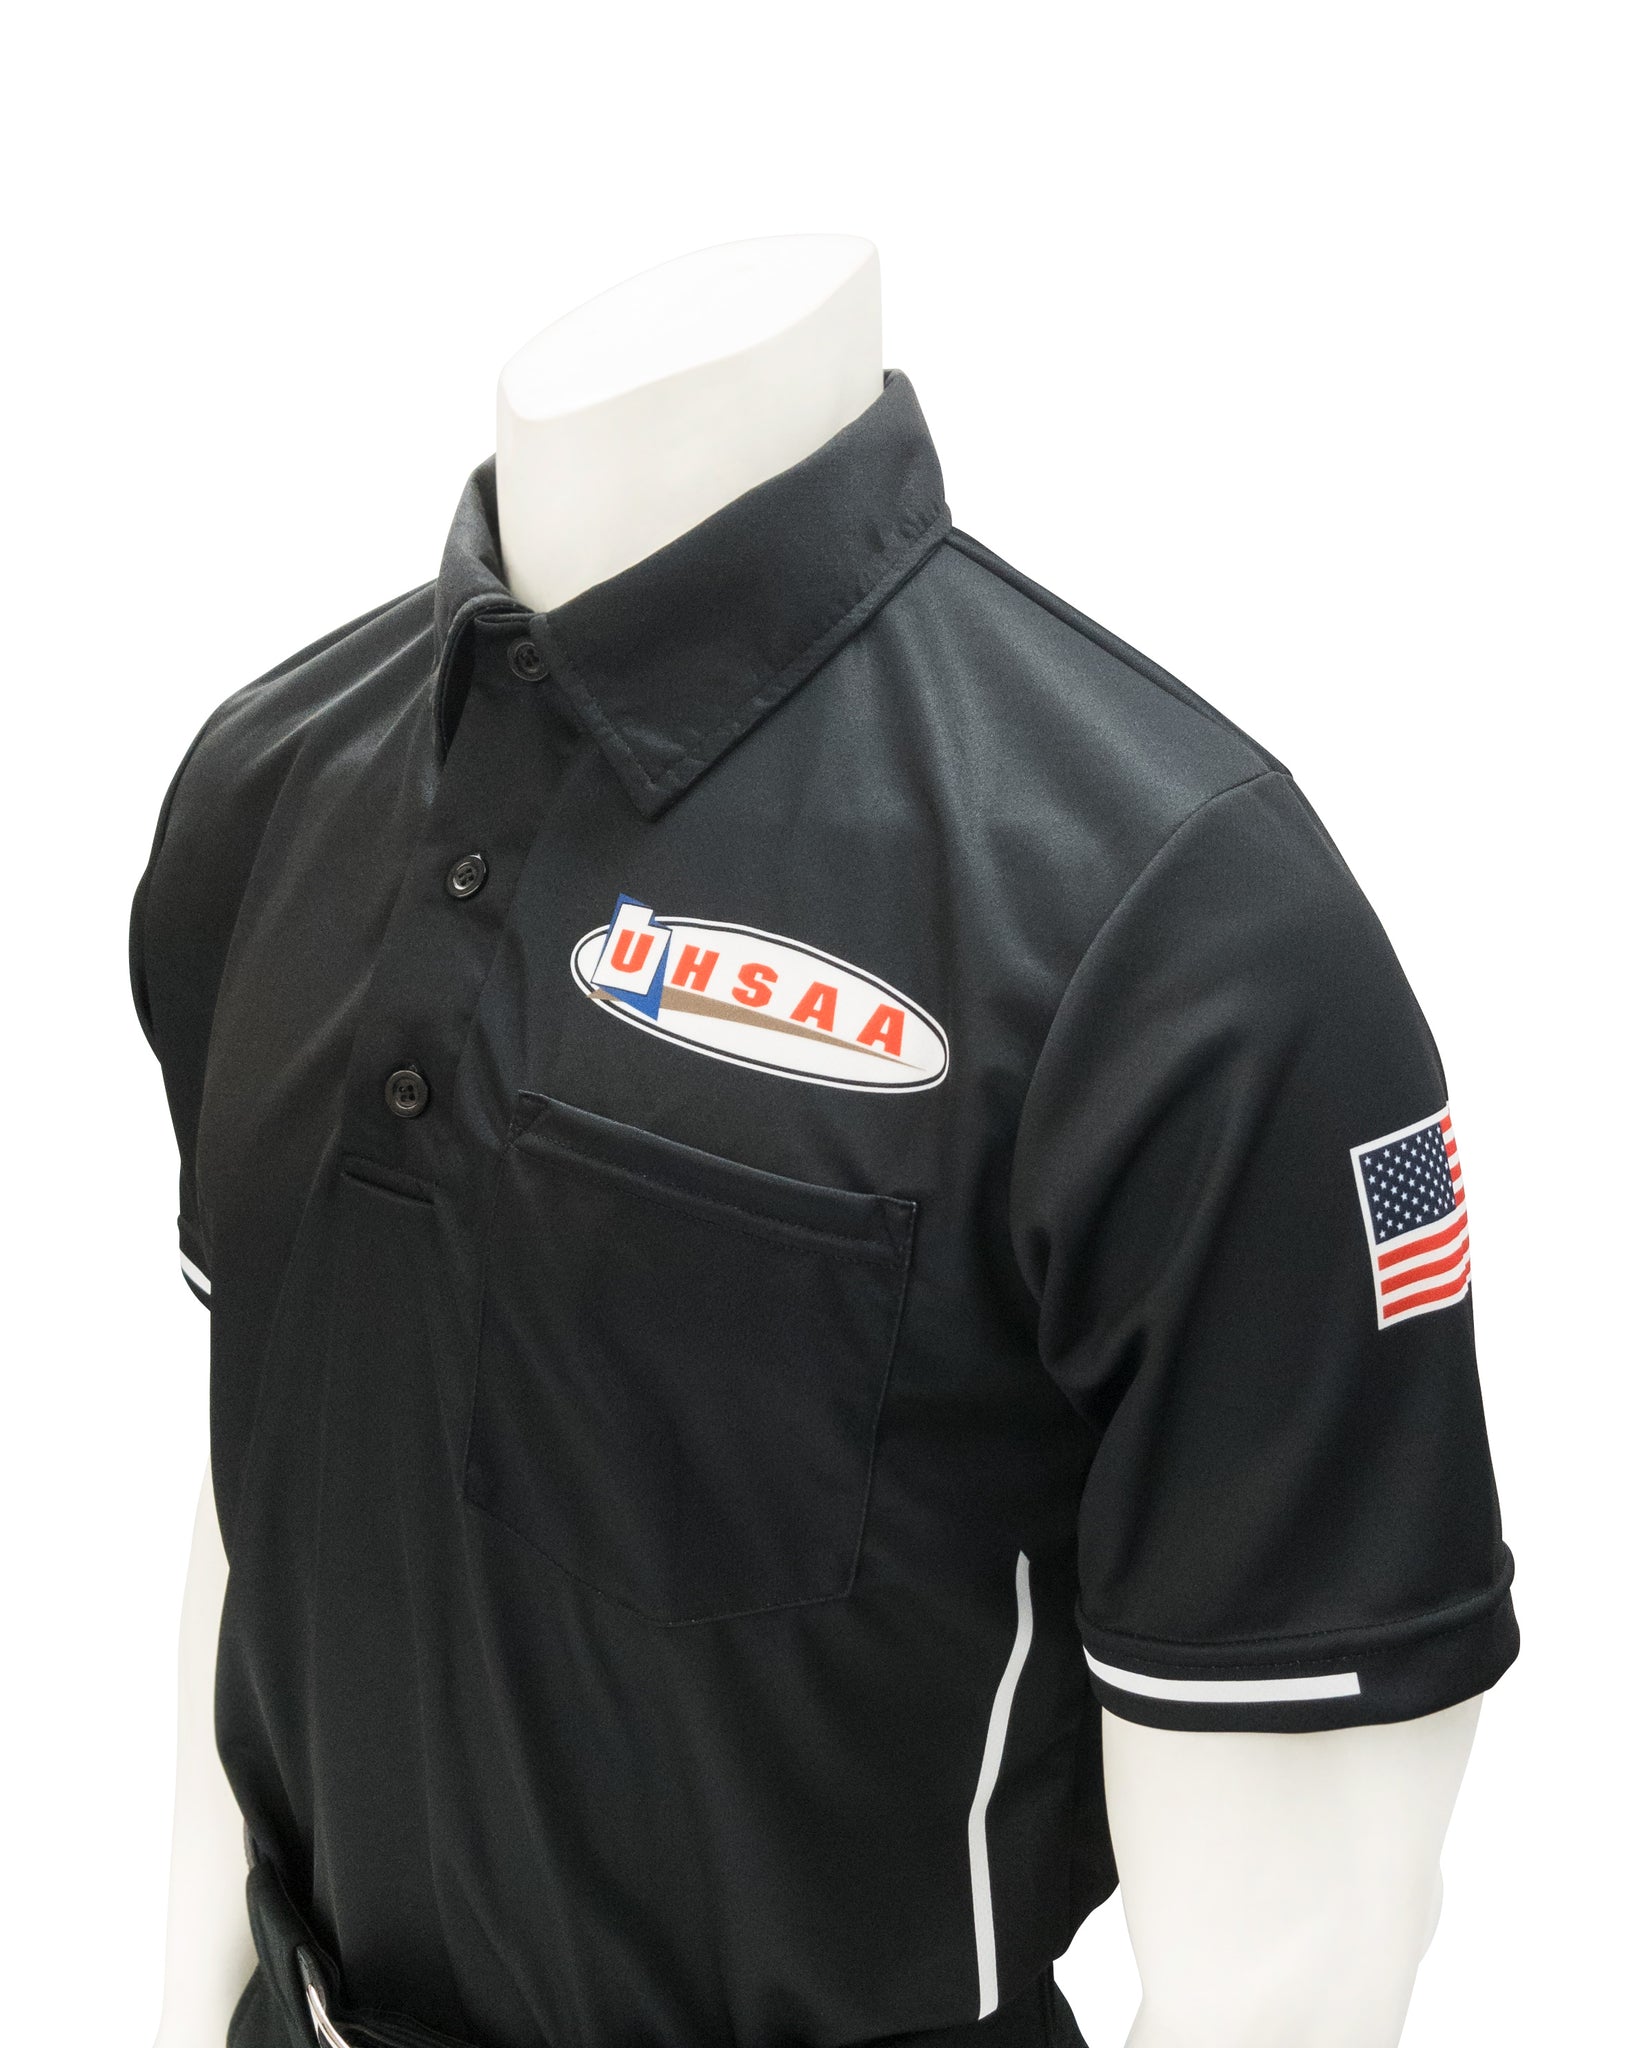 USA310UT - Smitty "Made in USA" - Ump Shirt Logo Above Pocket Black